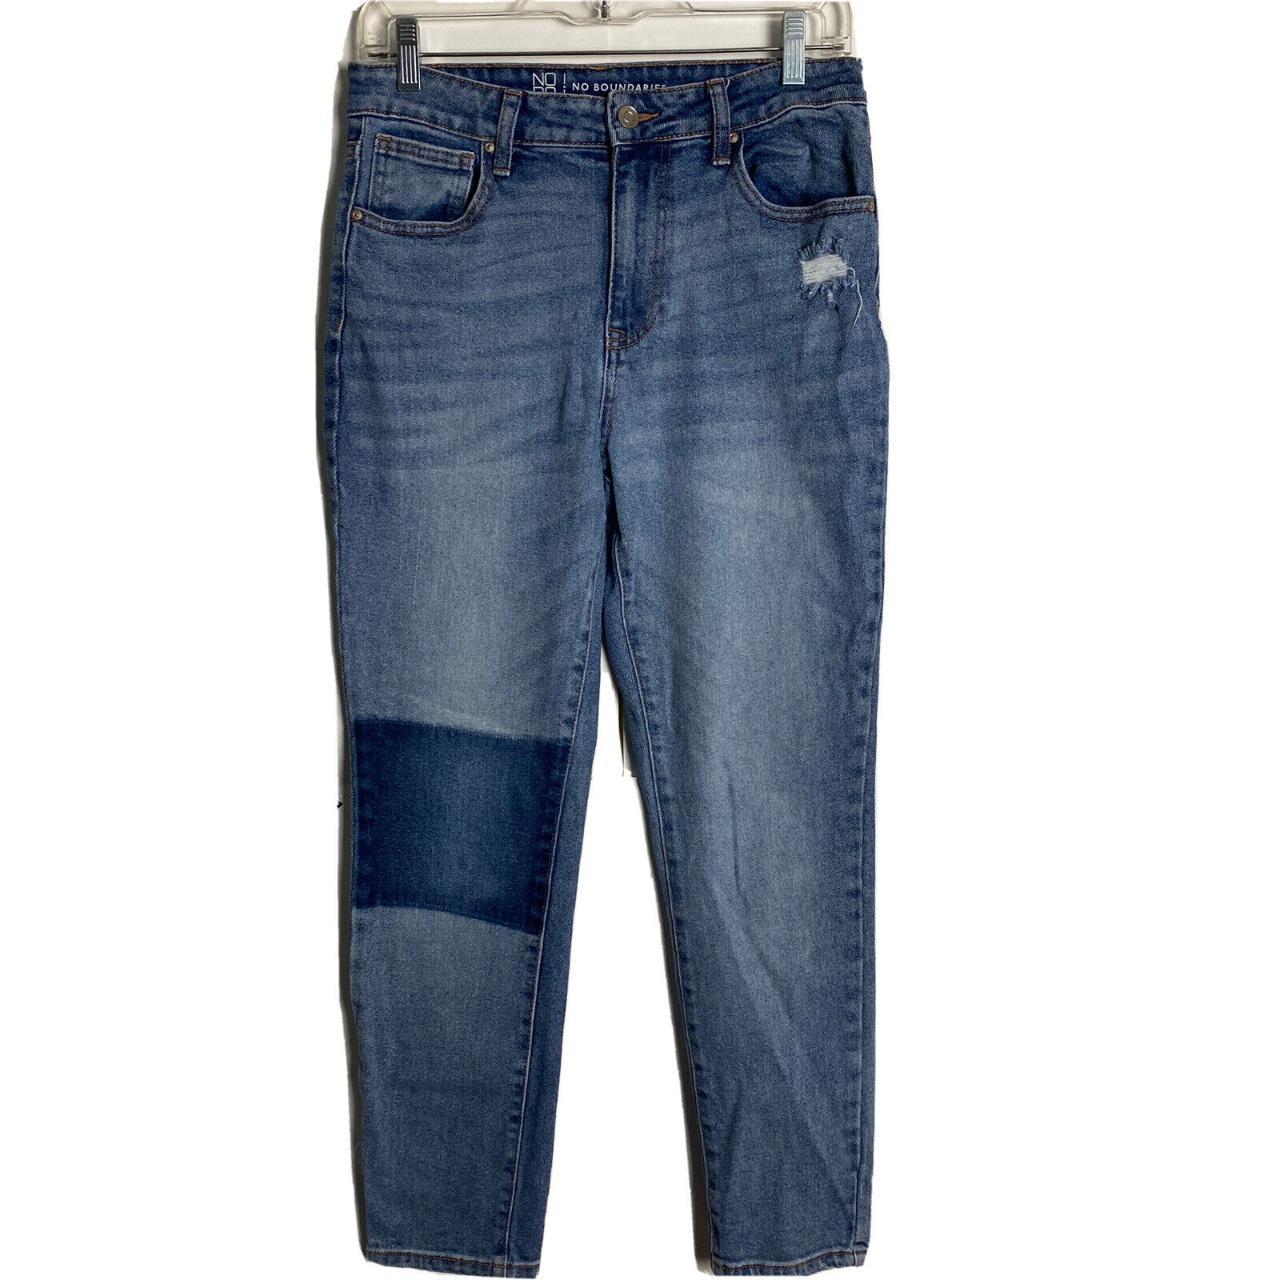 No Boundaries NoBo Juniors Jeans 7 30x27 Blue Denim - Depop